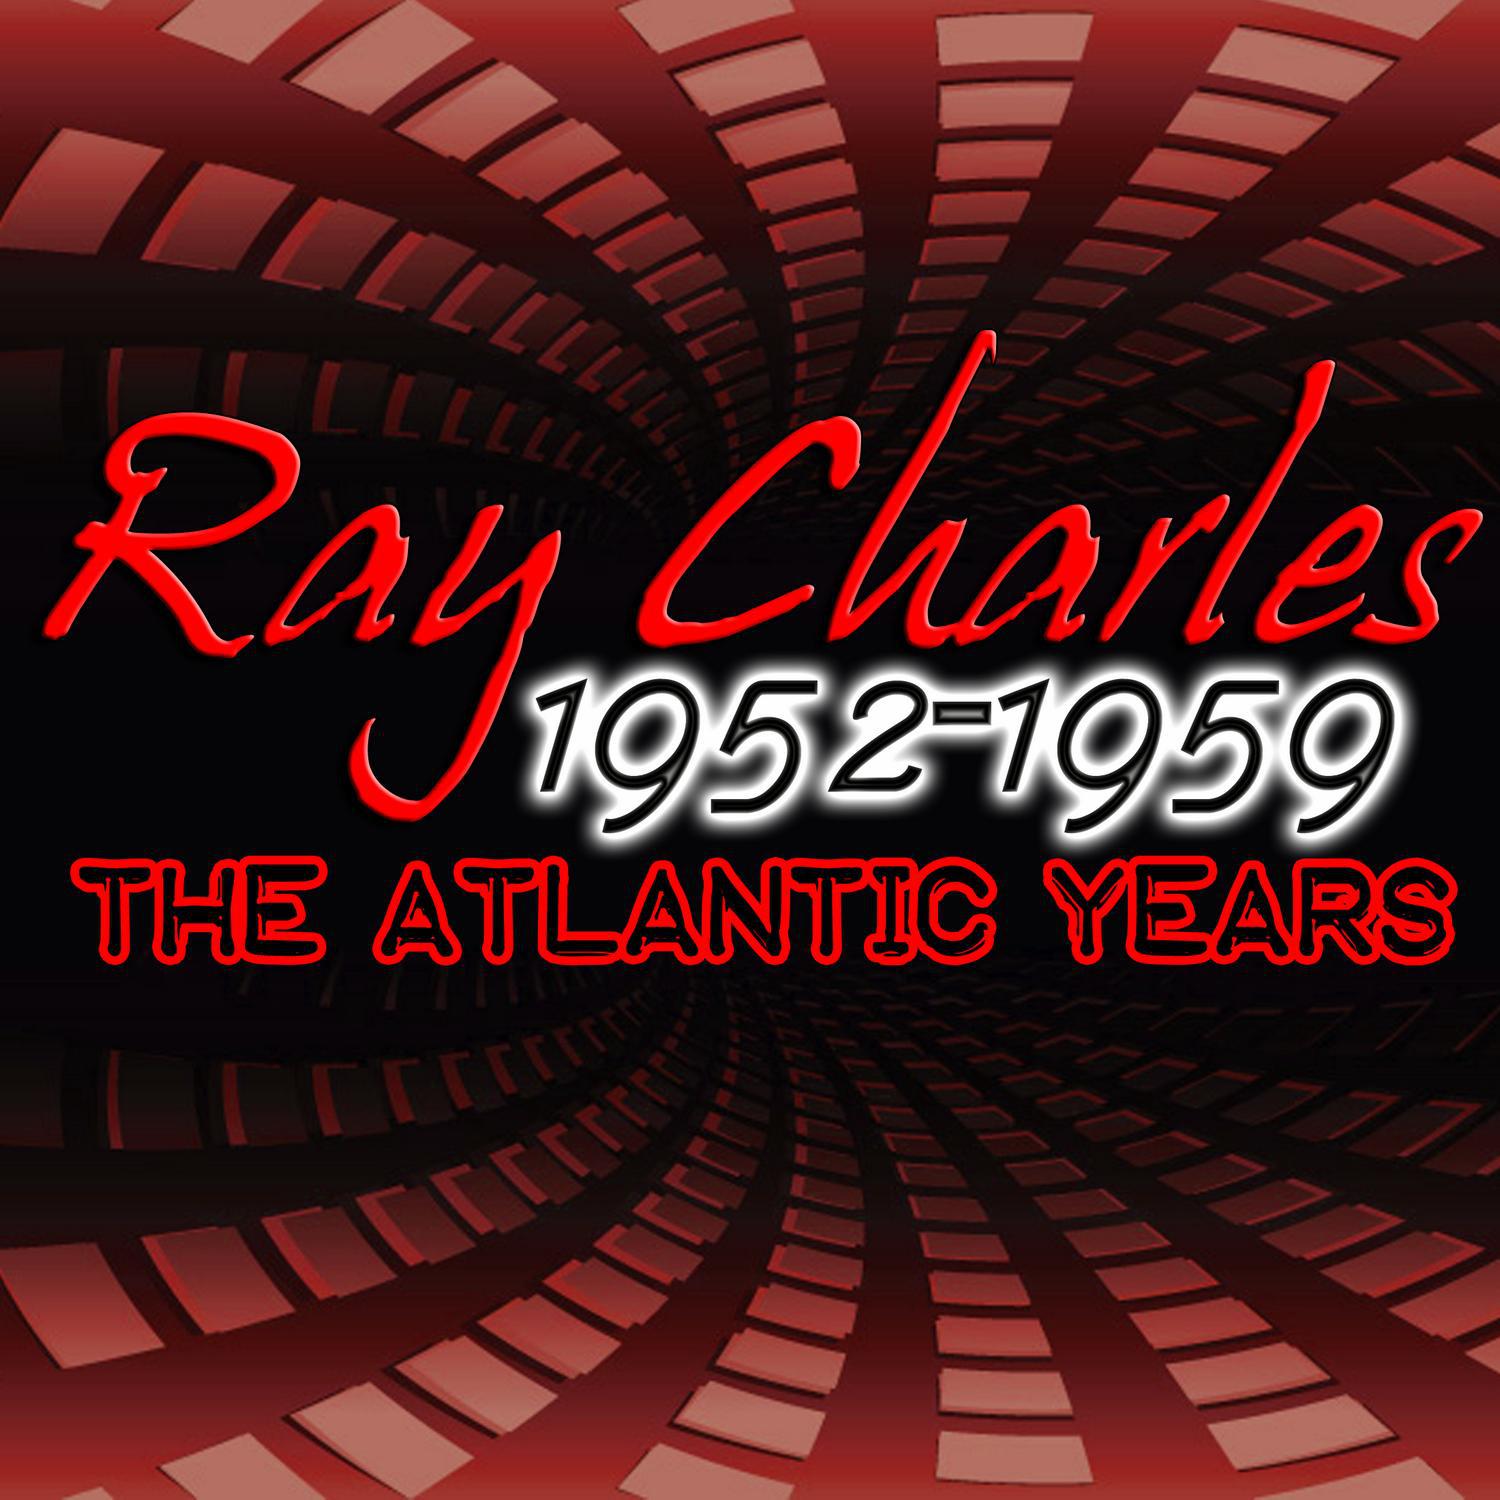 1952-1959: The Atlantic Years